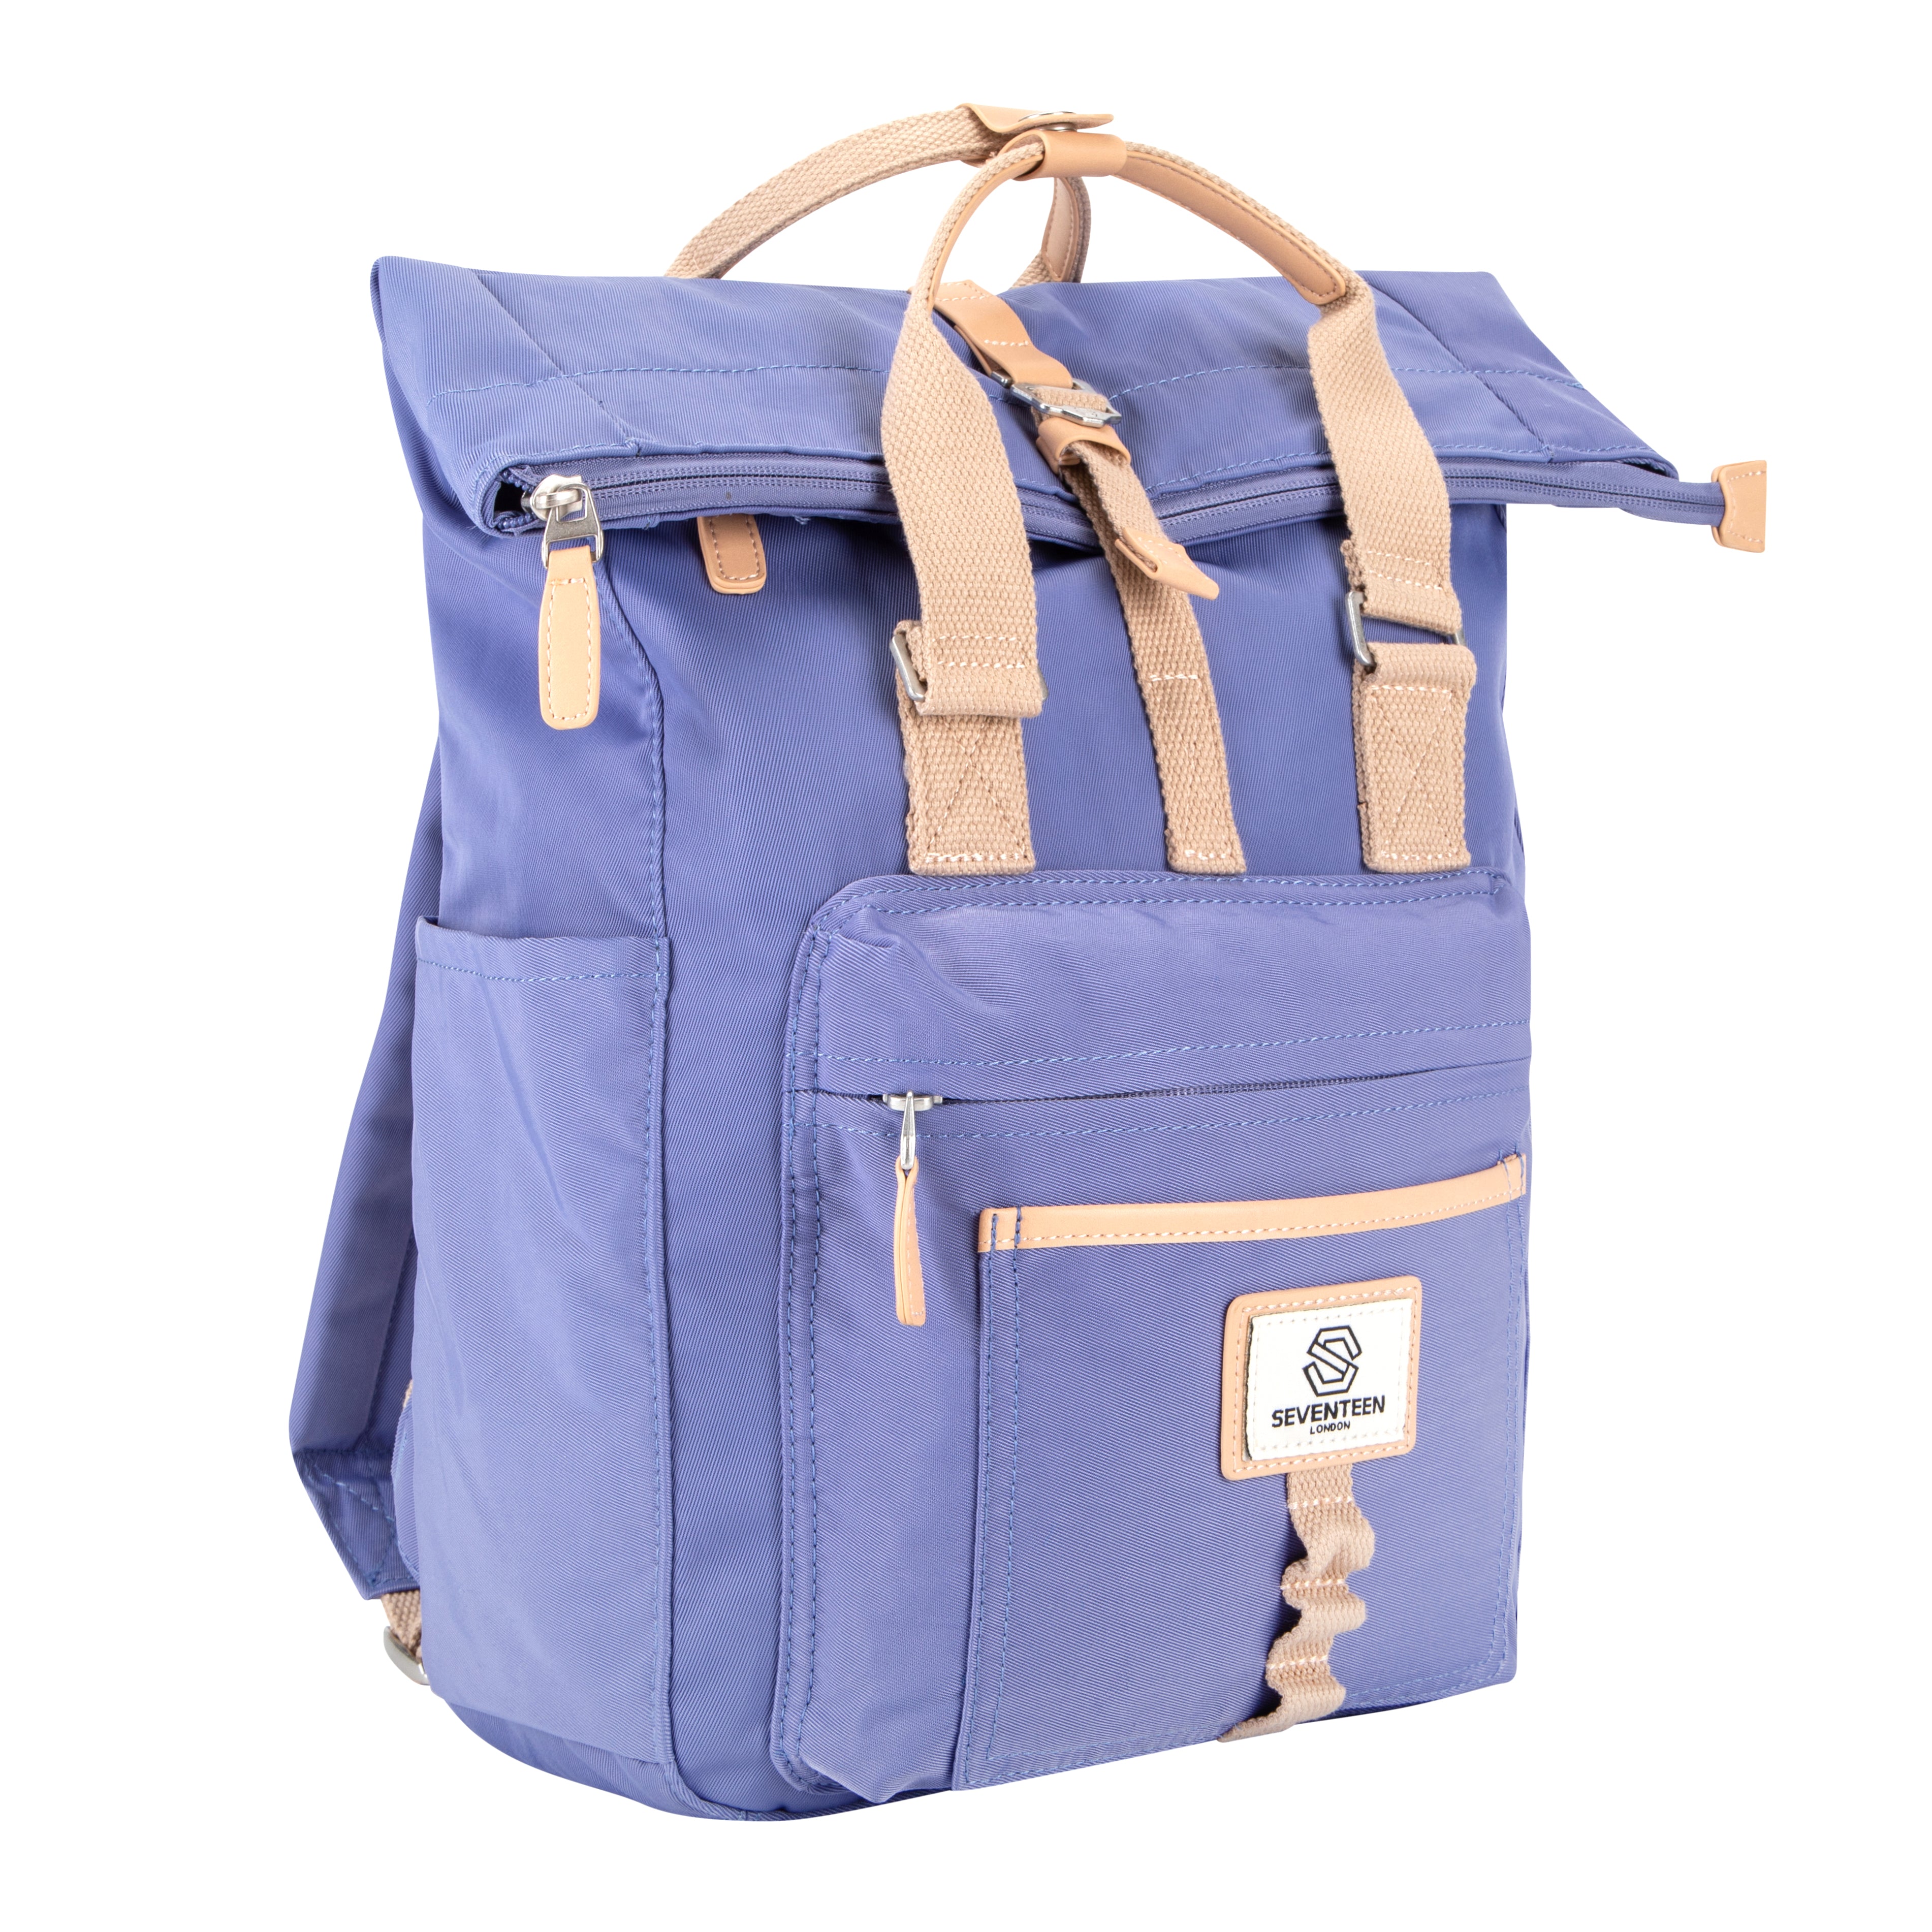 Canary Wharf Backpack - Flax Flower Blue